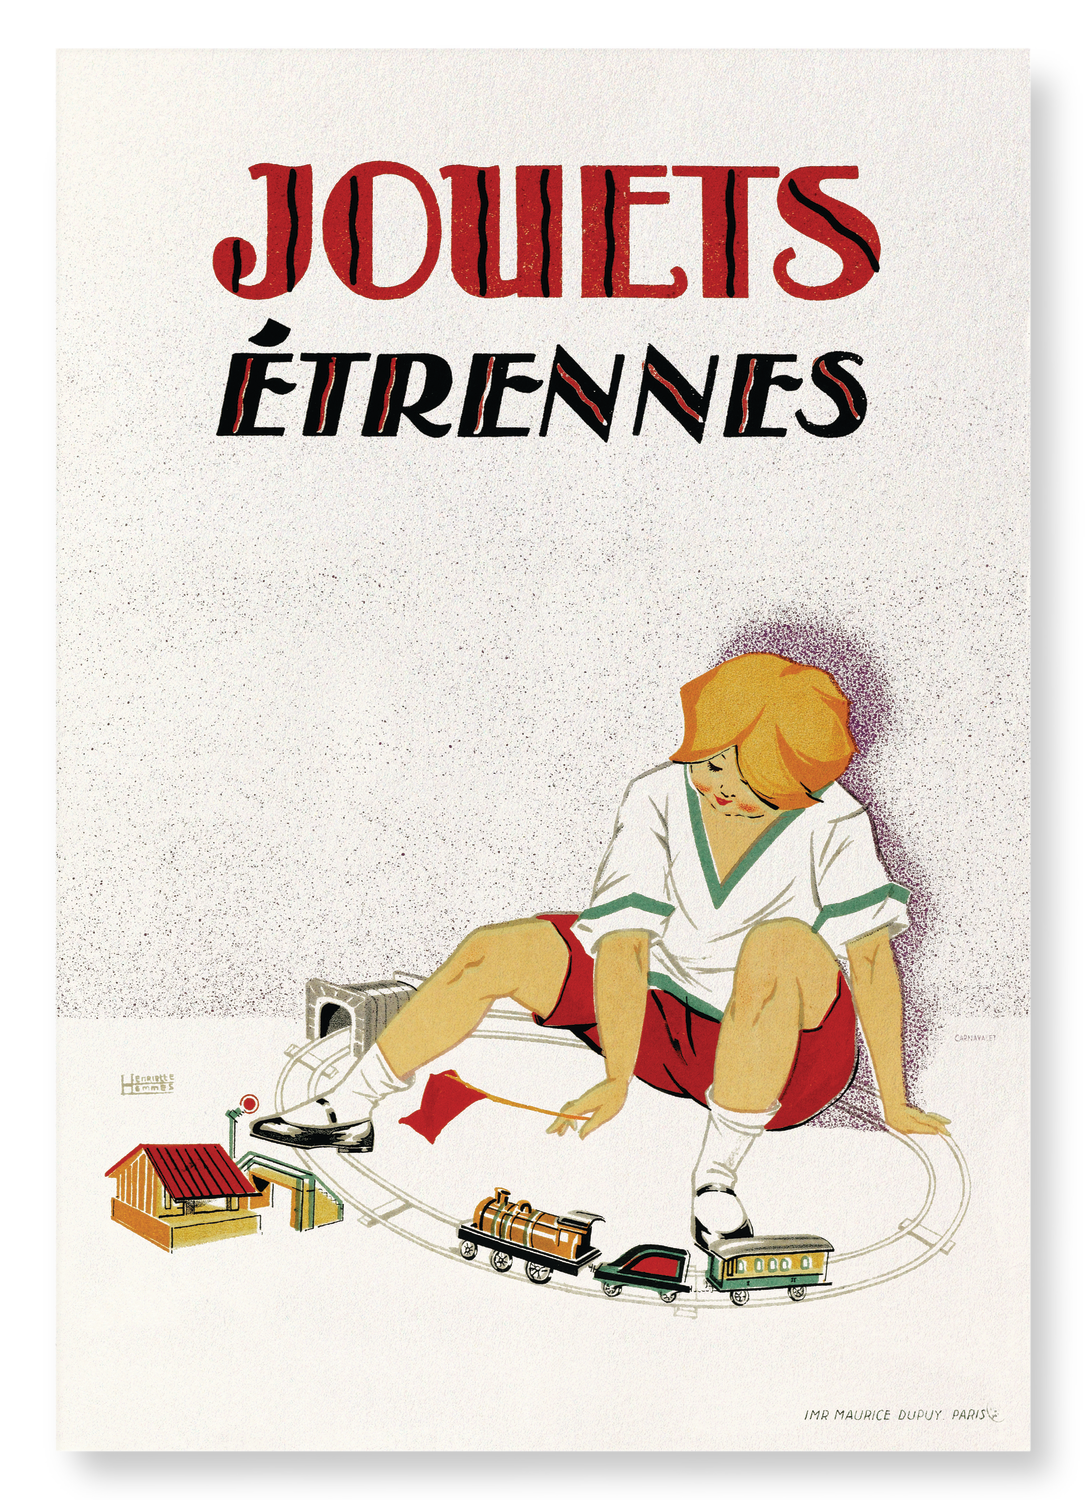 JOUETS ETRENNES (C.1920): Vintage Art Print